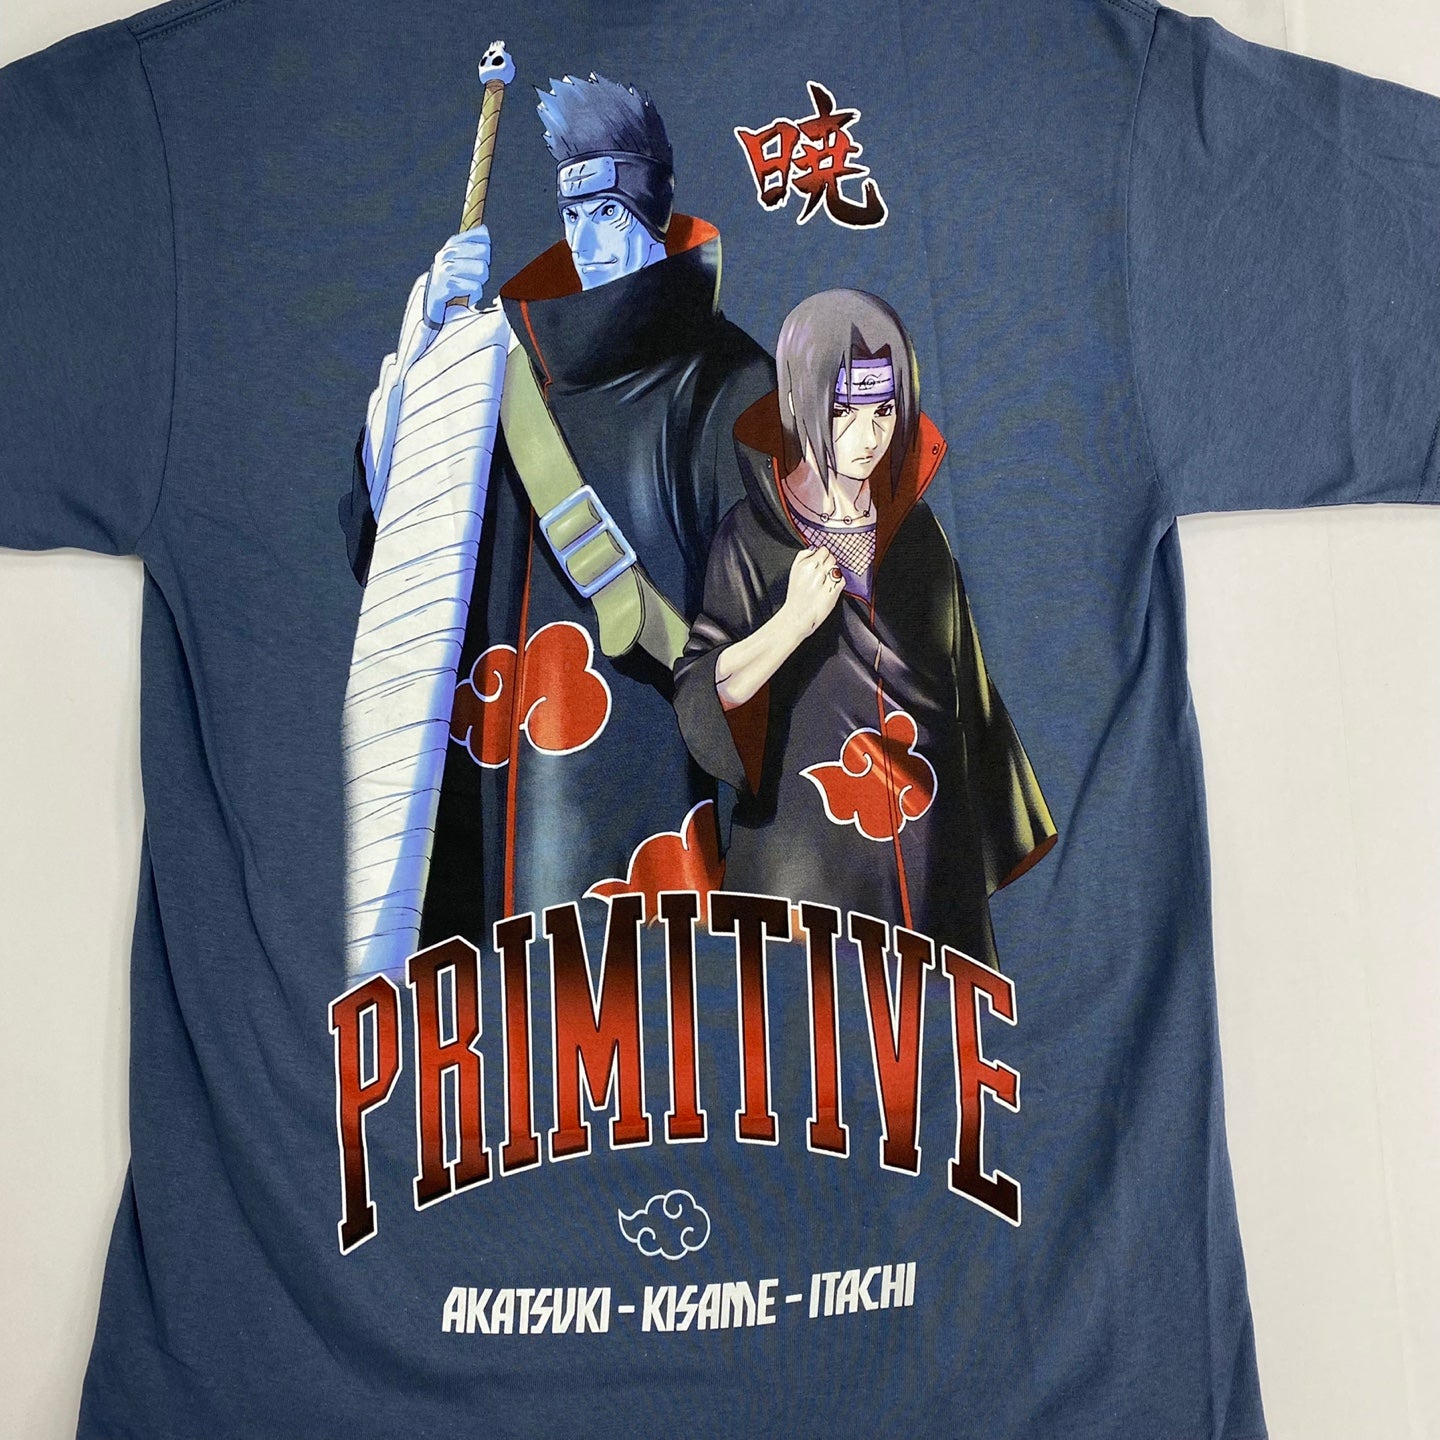 Primitive Skateboards X Naruto Shirt Akatsuki Slate Color T-Shirt